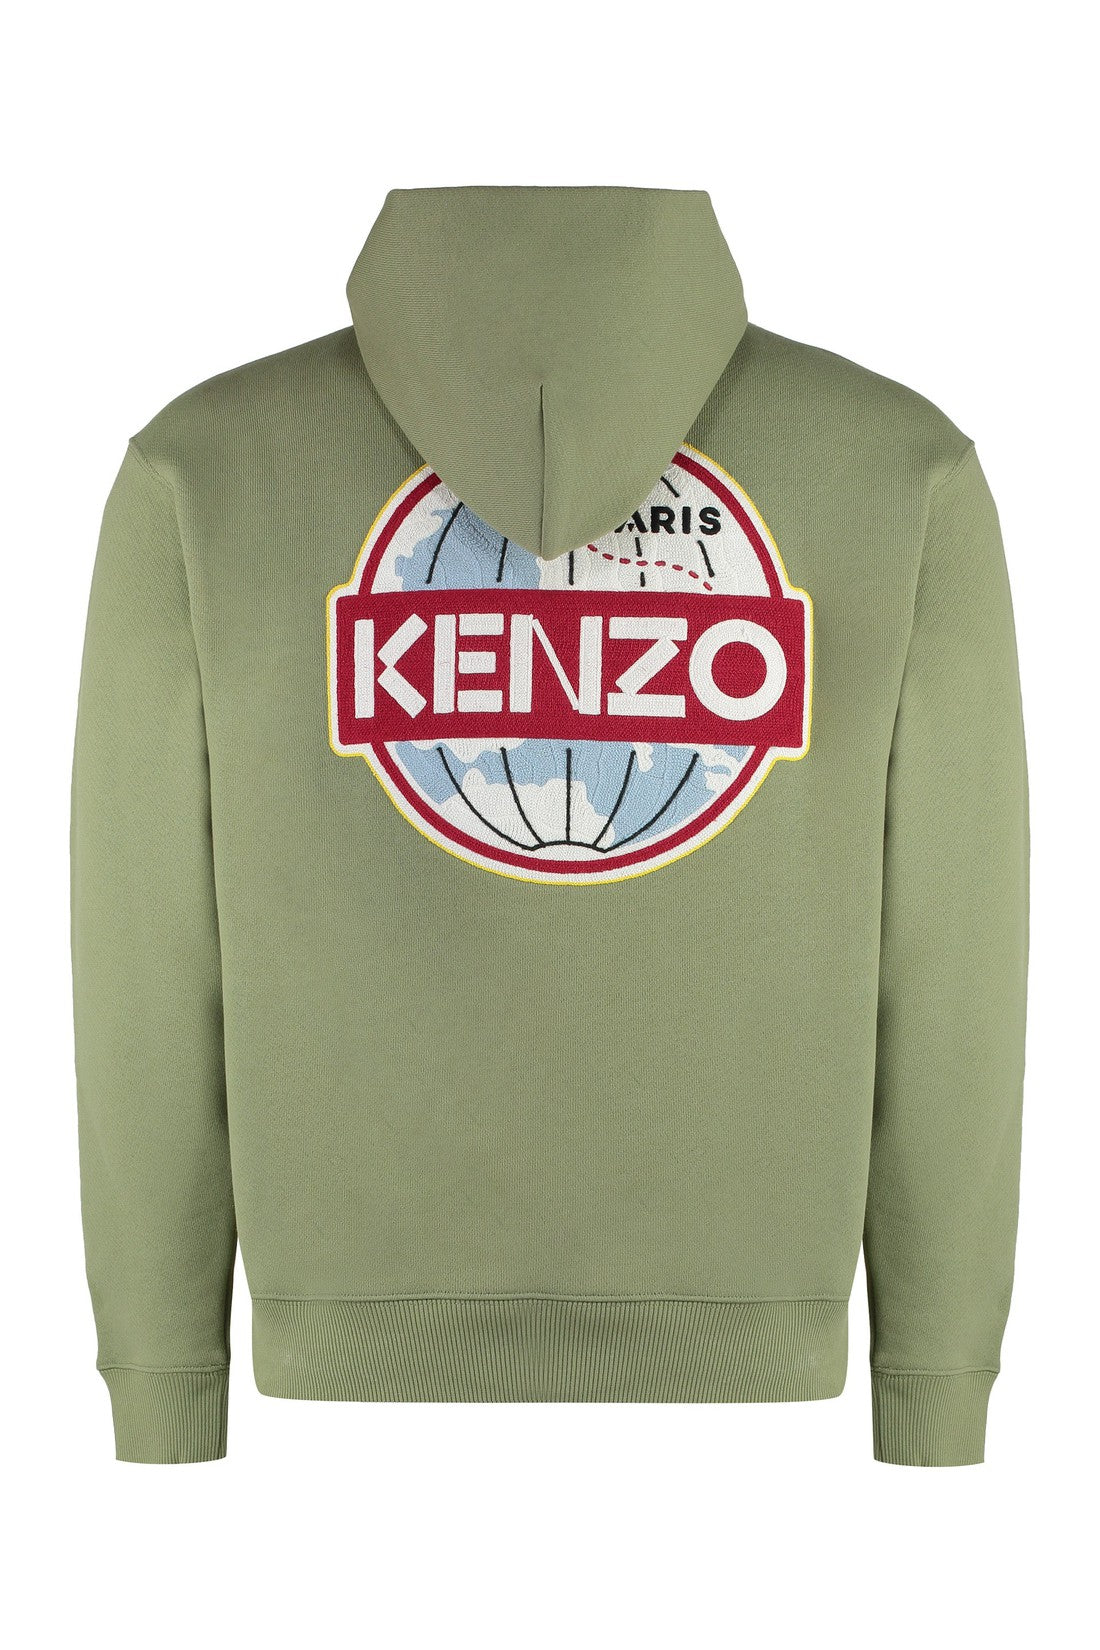 Kenzo-OUTLET-SALE-Cotton hoodie-ARCHIVIST